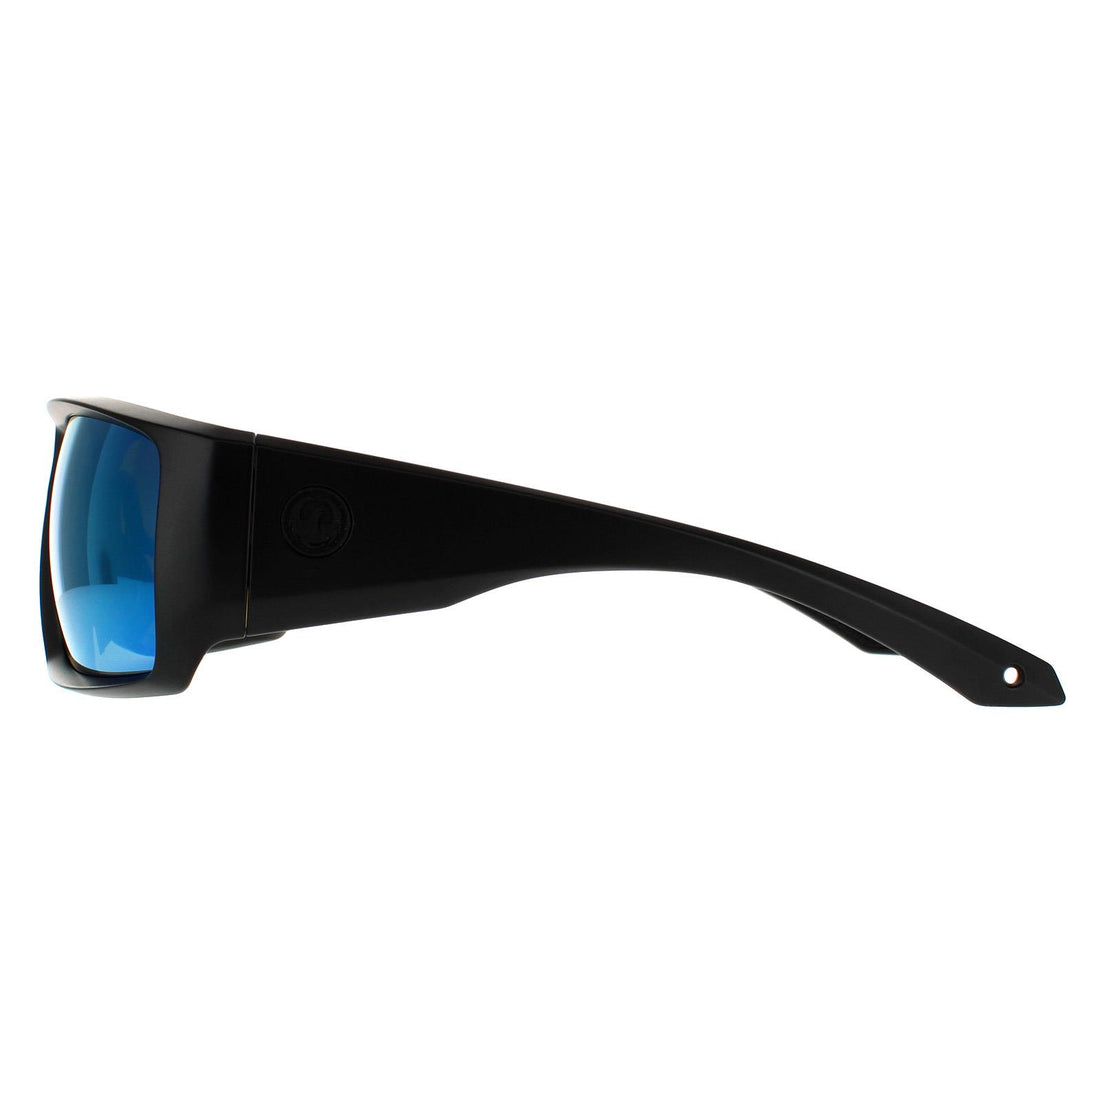 Dragon Sunglasses Equinox X 41089-007 Matte Black H2O Lumalens Deep Green Ion Polarized